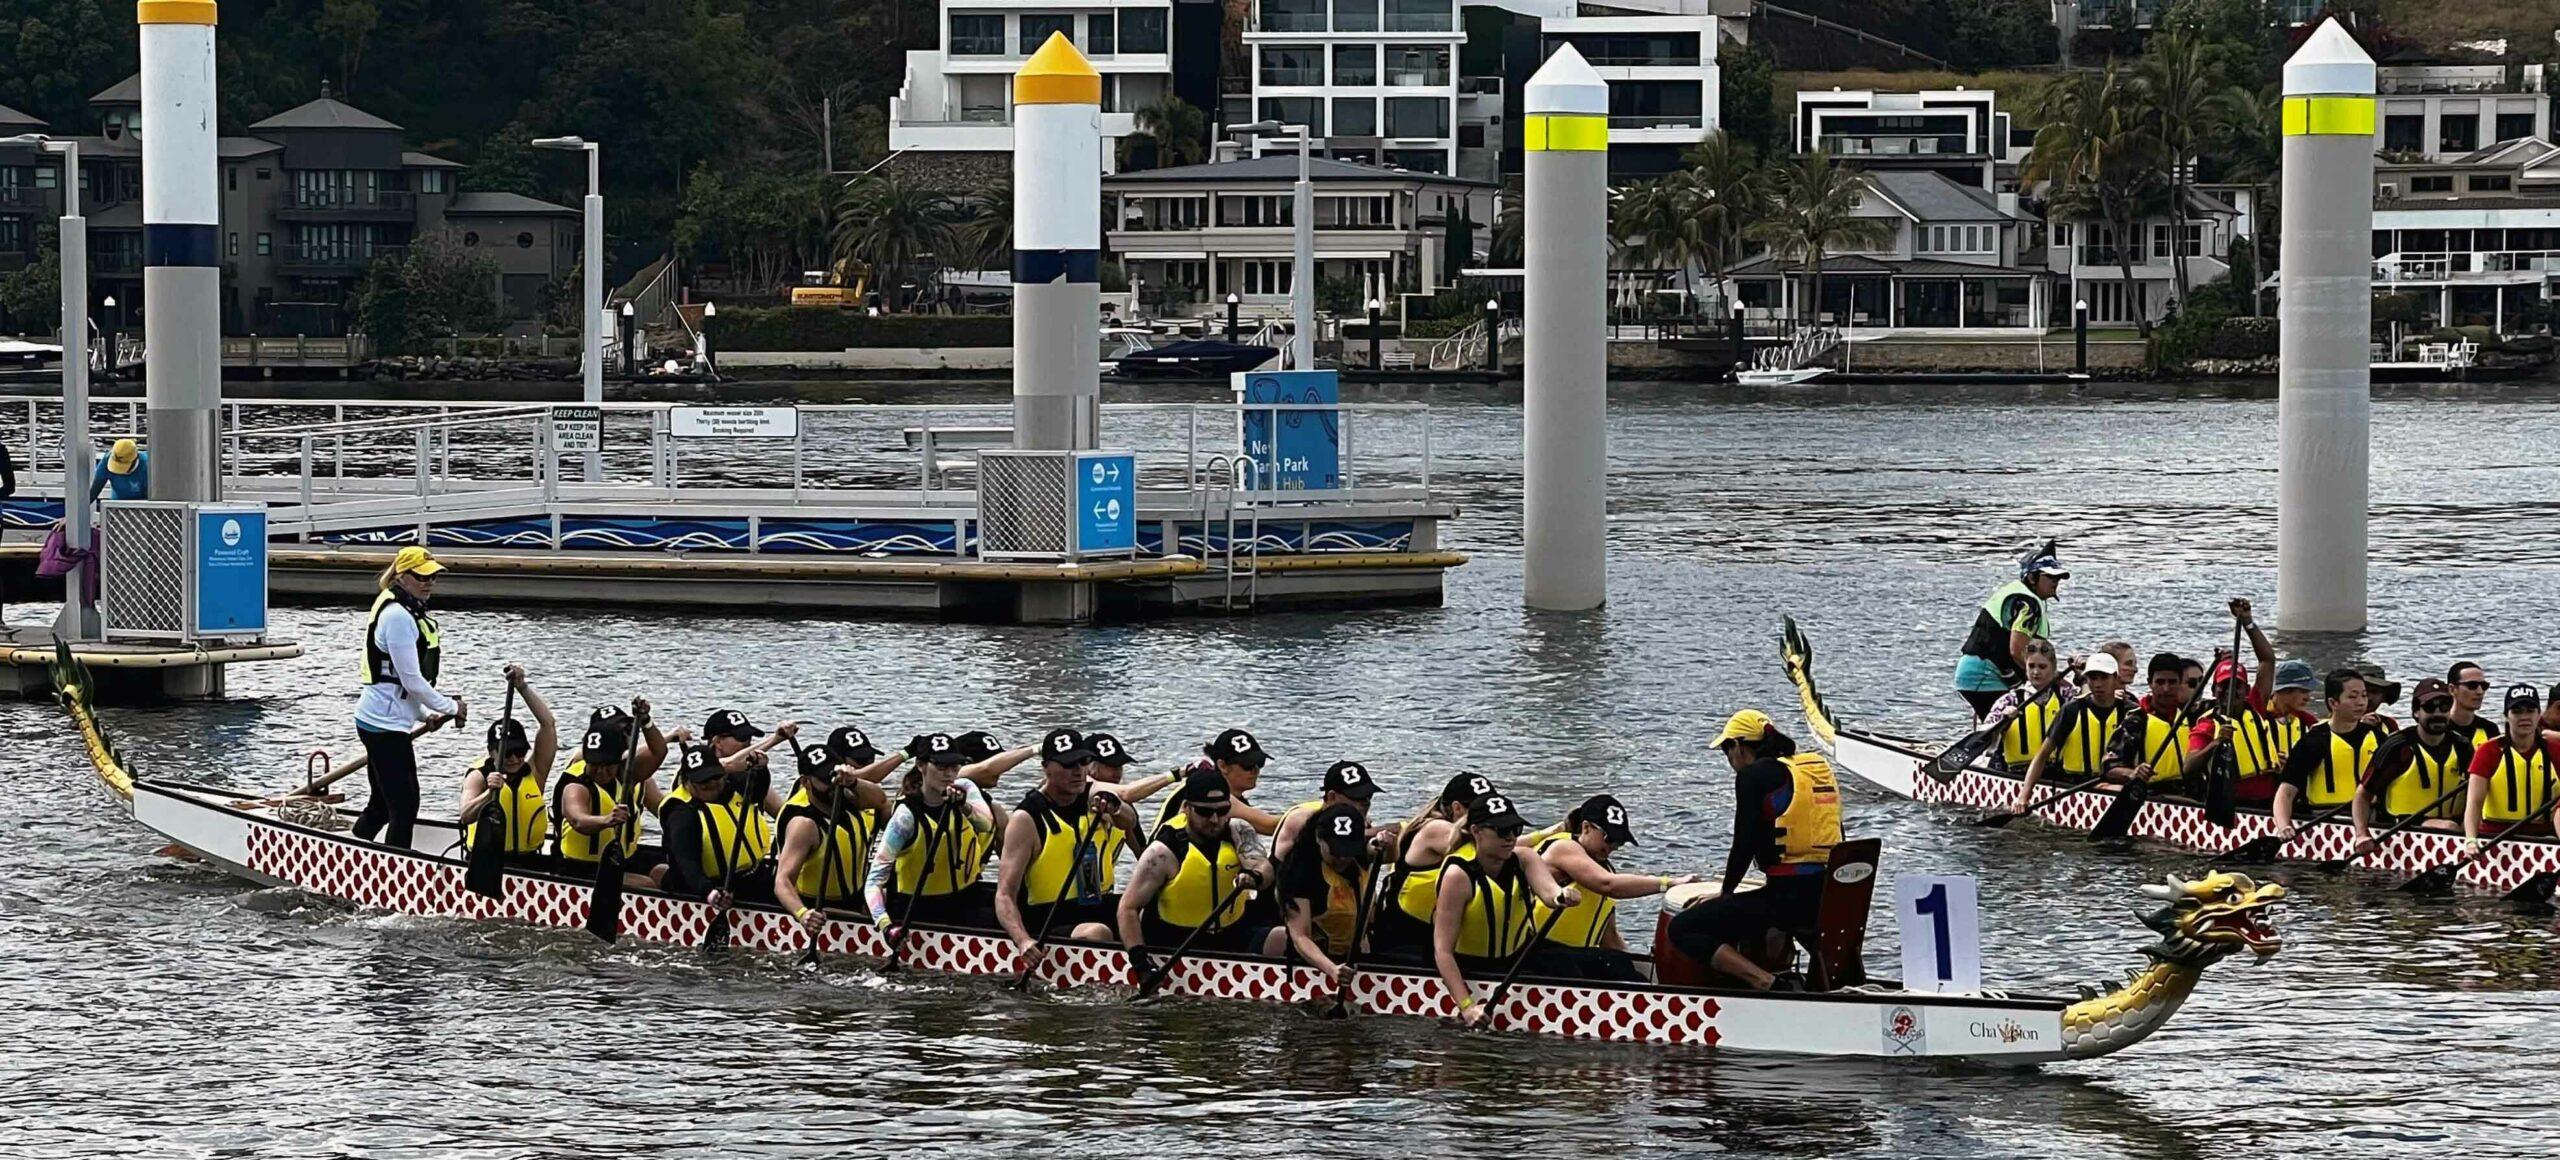 Orcoda Rowing Team